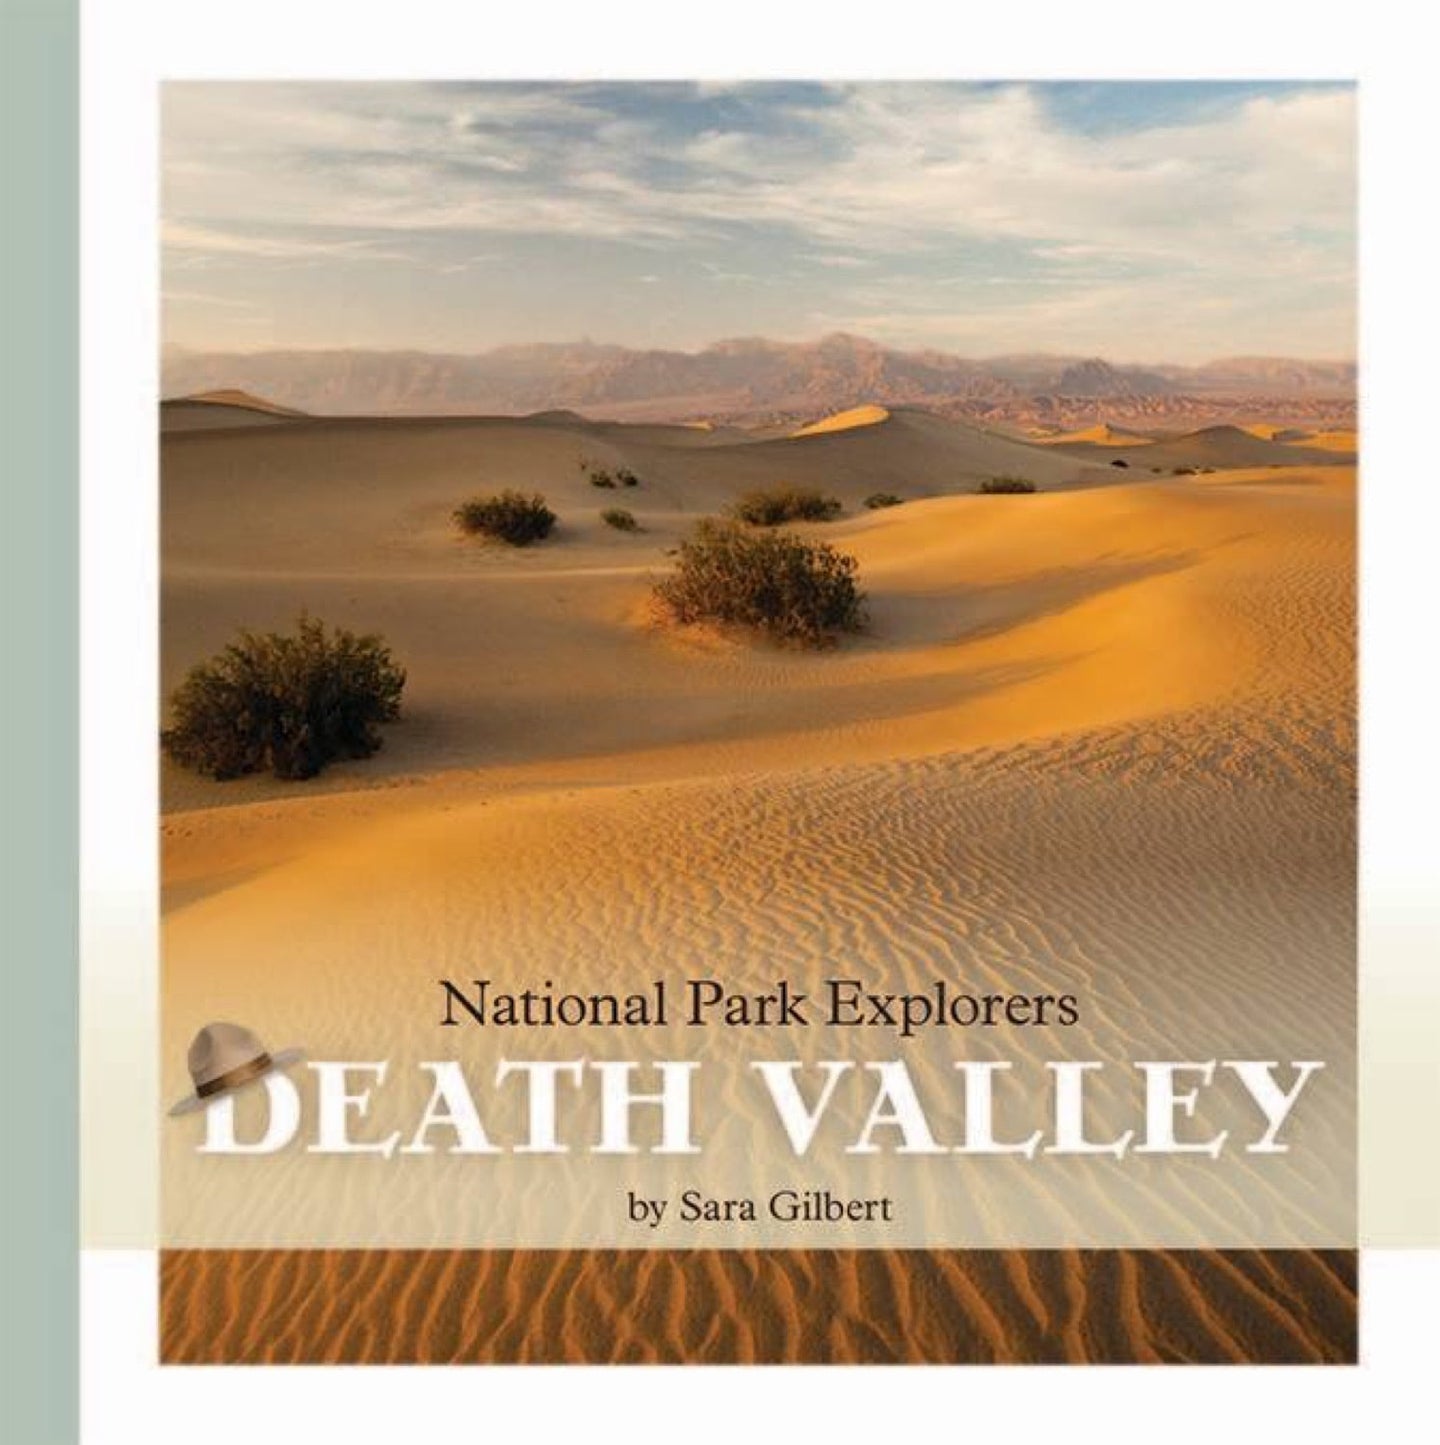 National Park Explorers: Death Valley